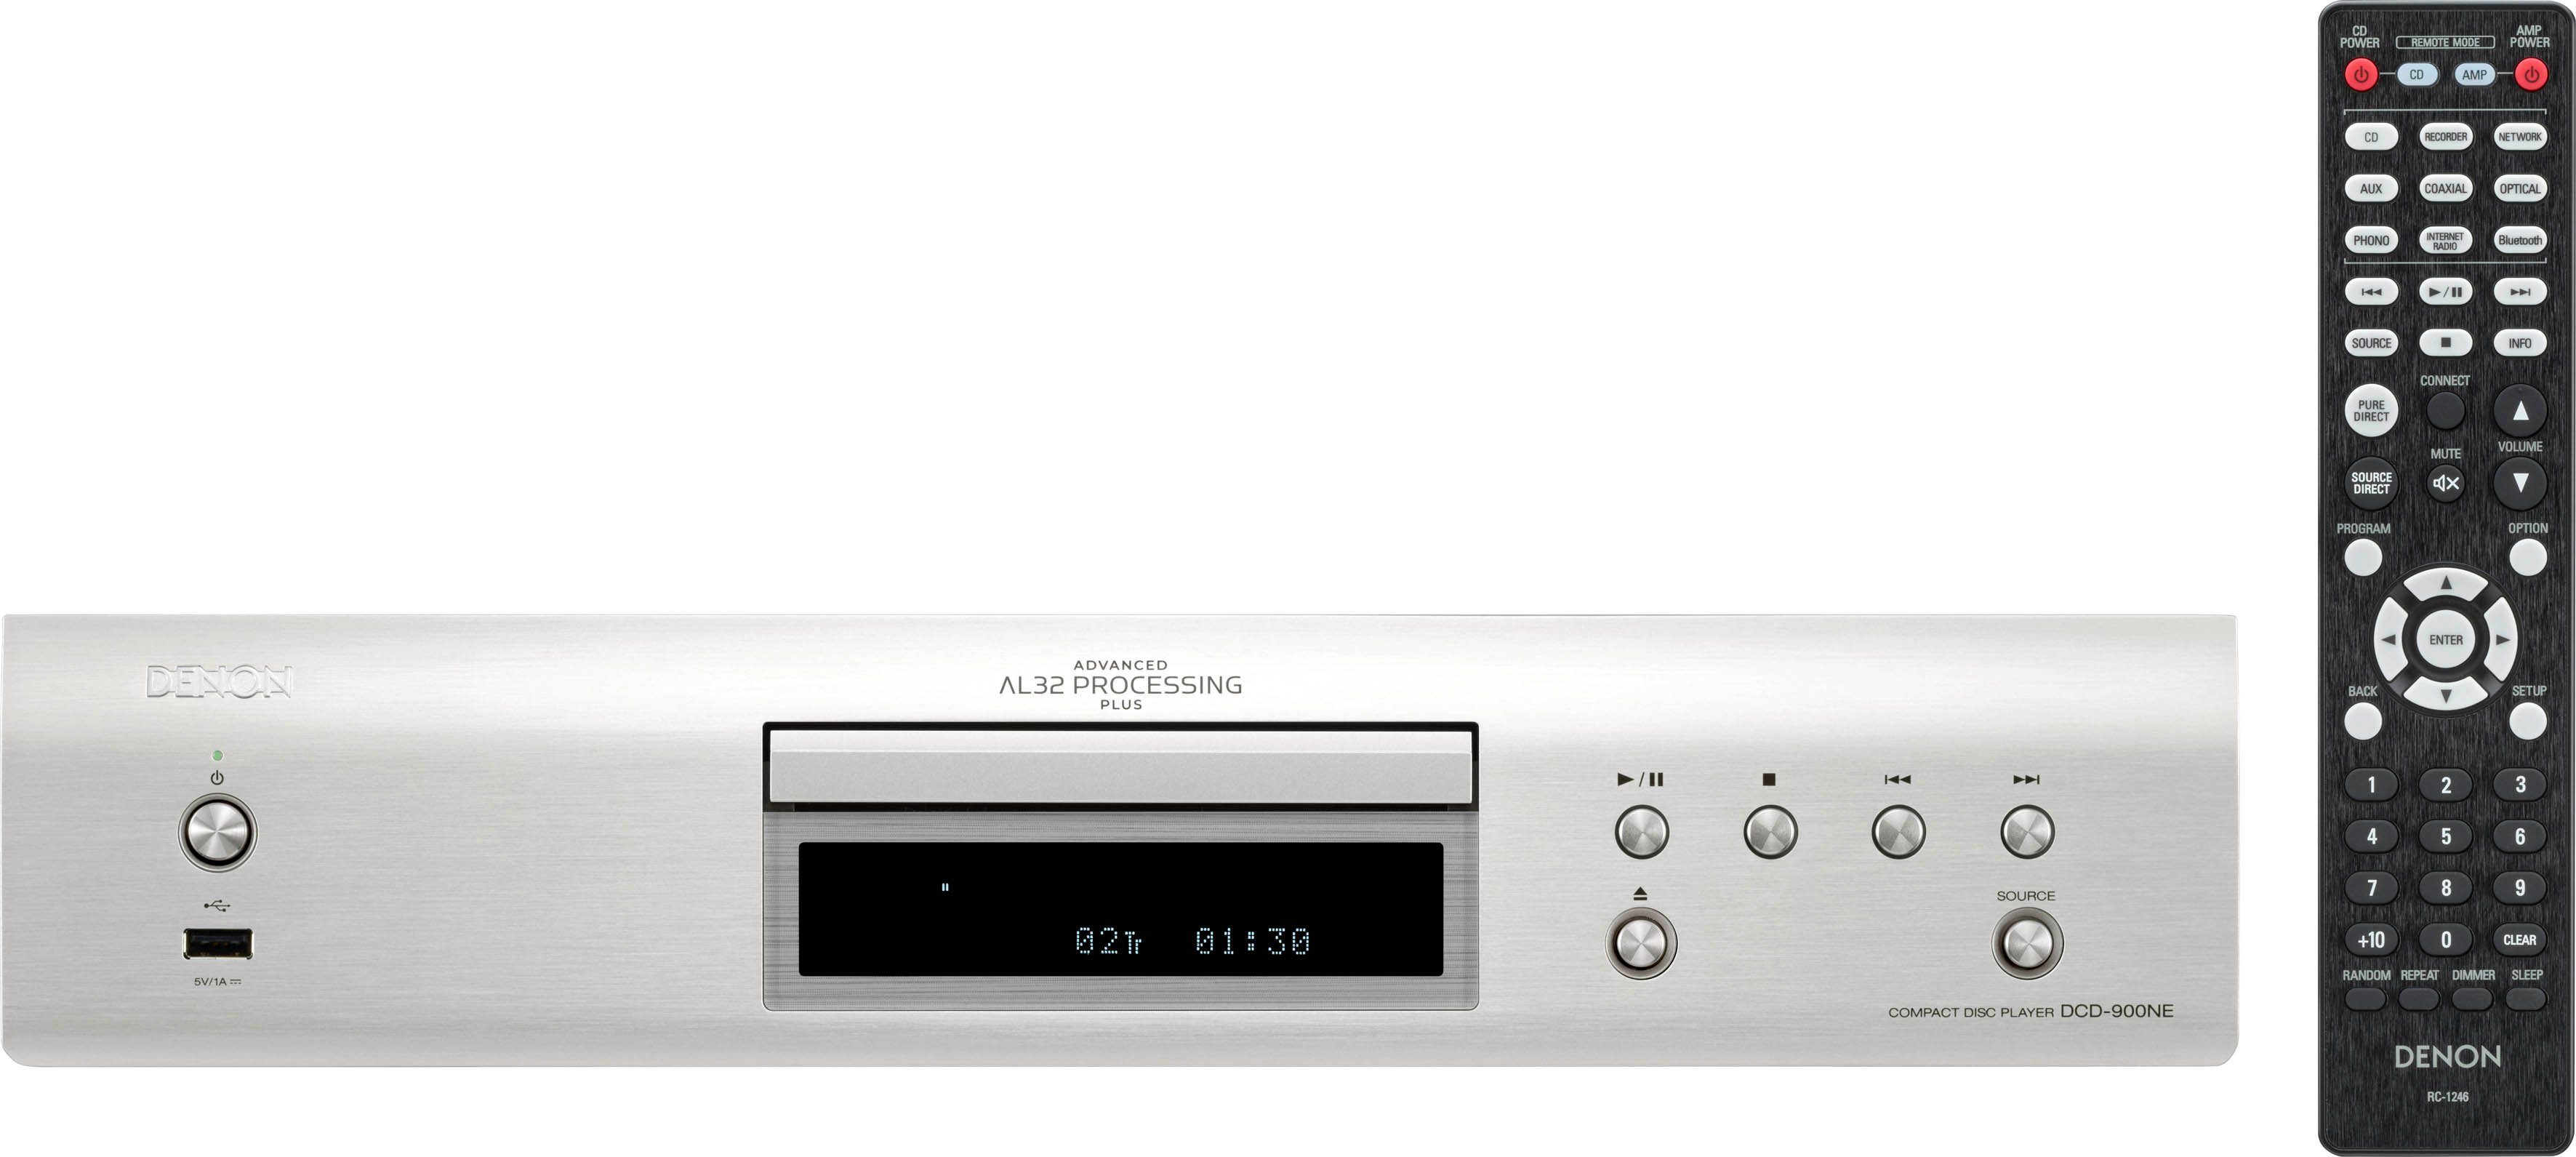 (USB-Audiowiedergabe) silber Denon CD-Player DCD-900NE